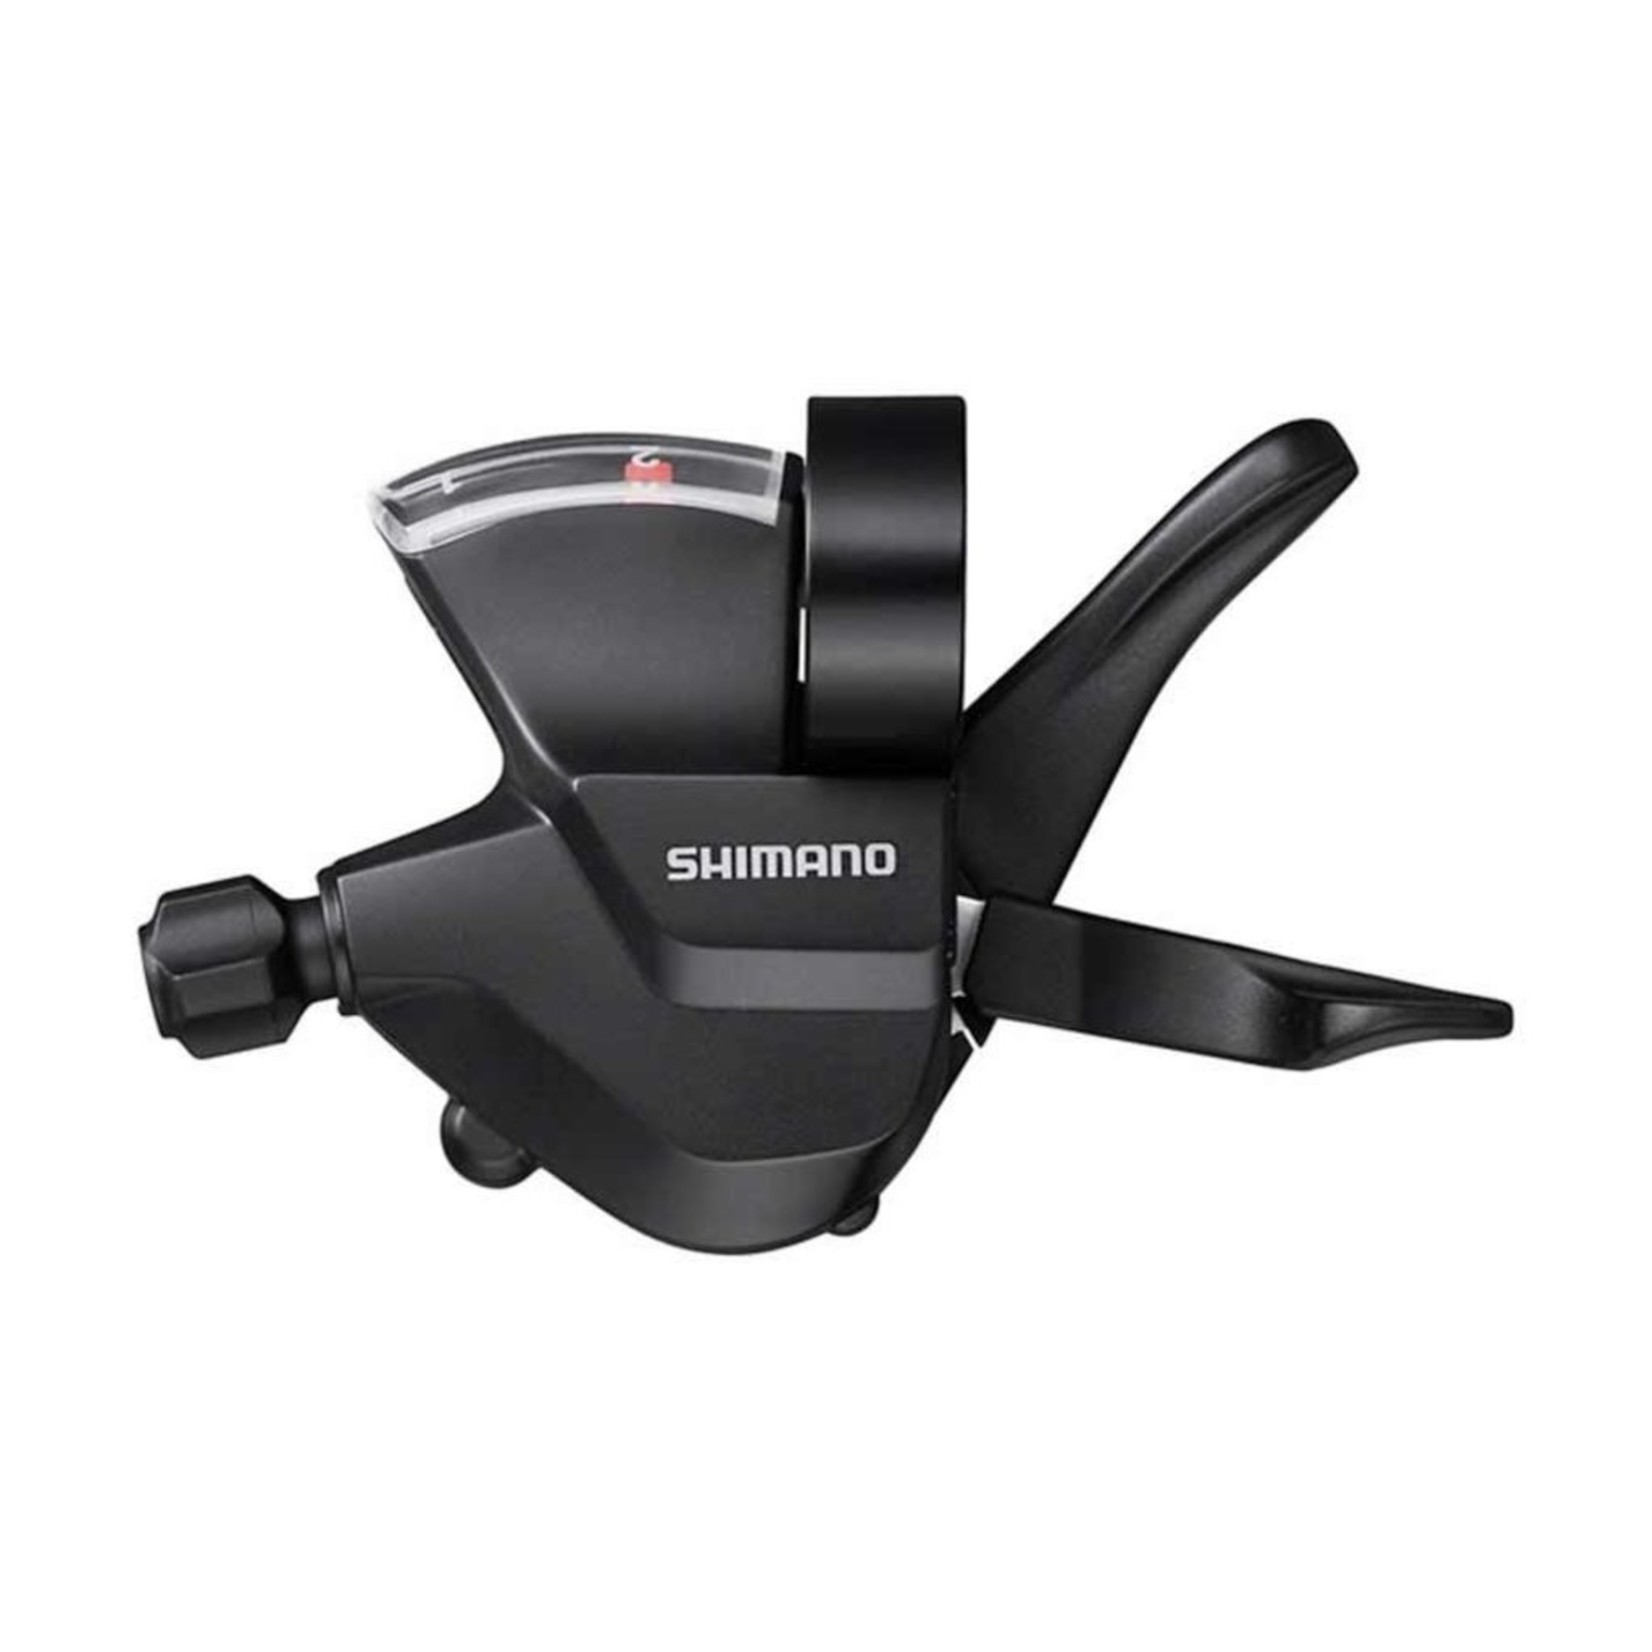 Shimano Shimano Shift Lever SL-M315-7R Right 7-Speed Rapidfire Plus, W/ Optical Gear